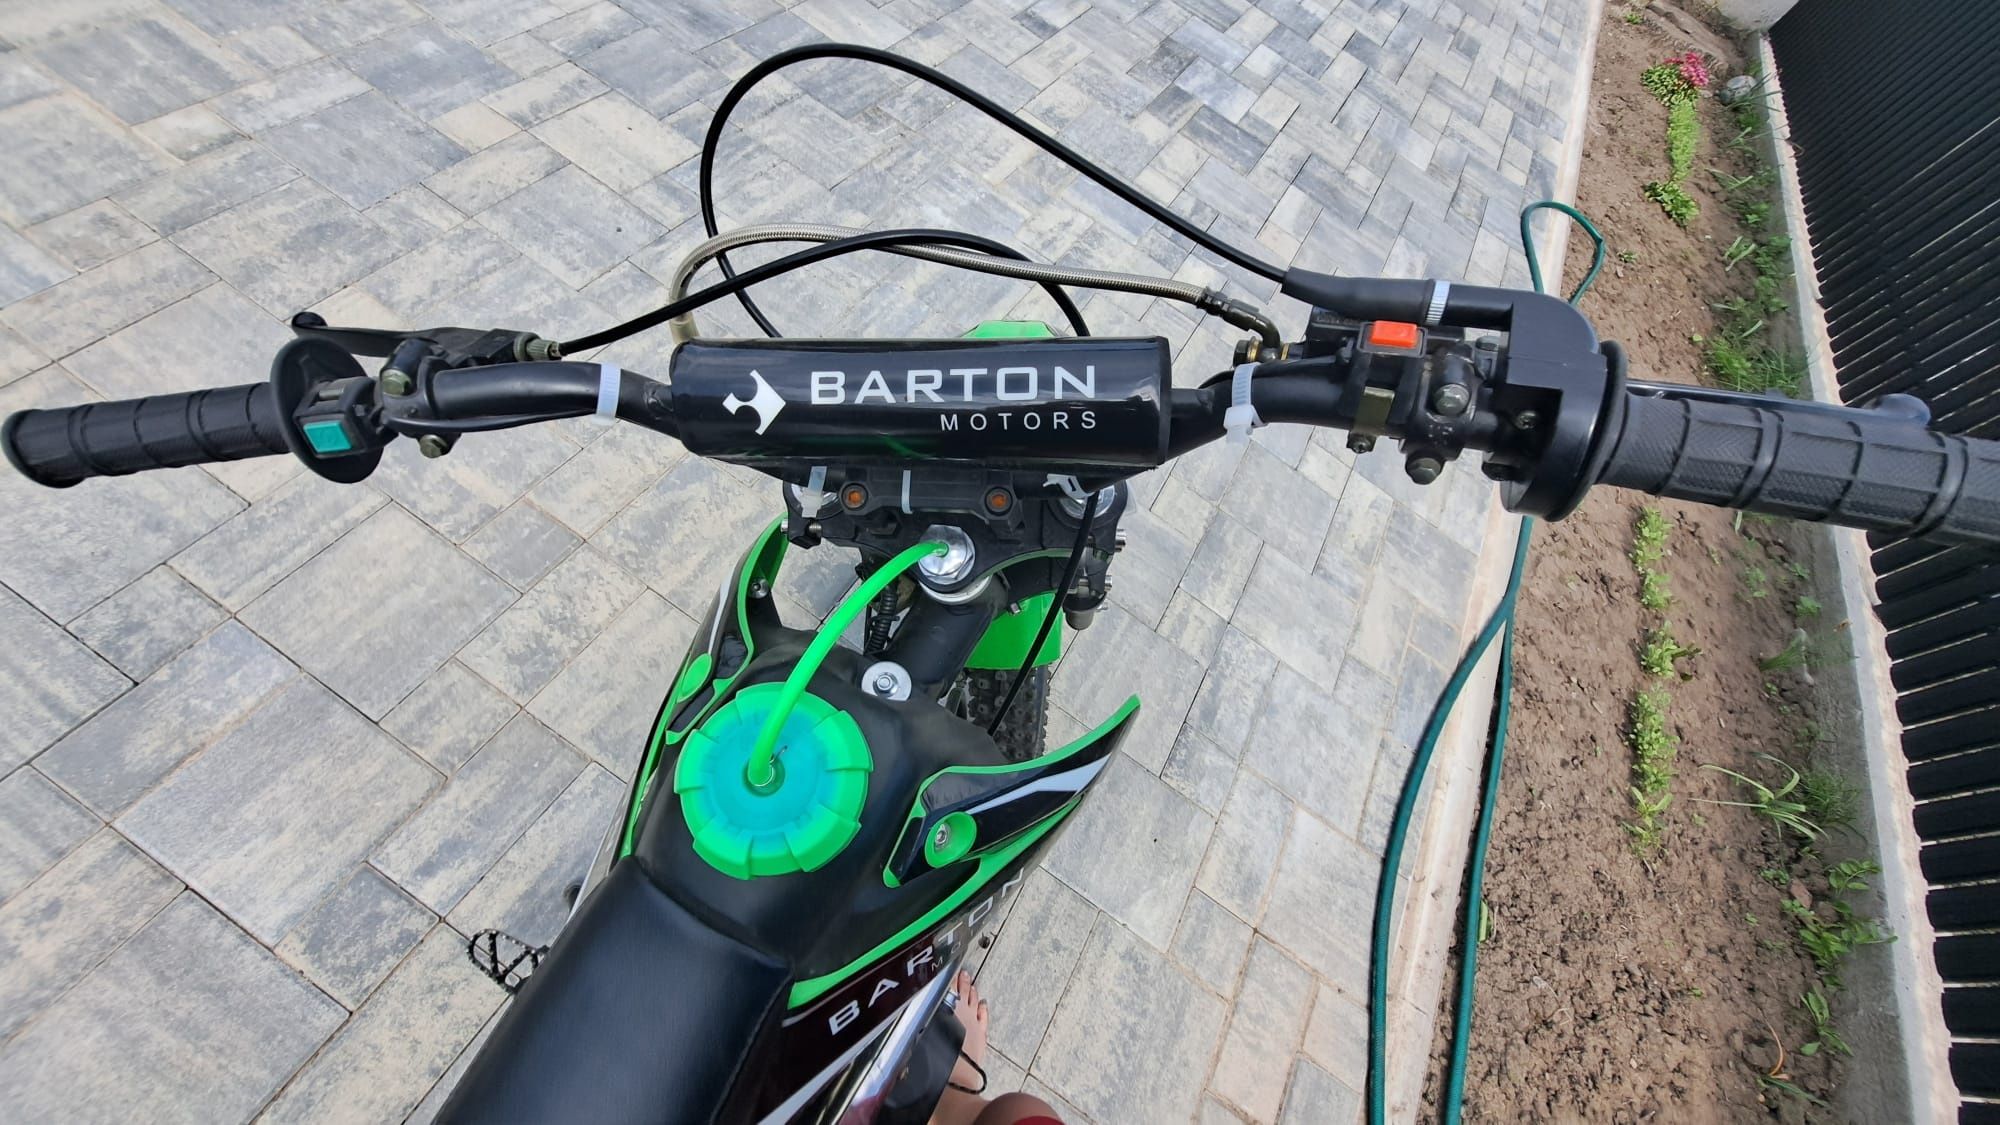 Motor 125cc Barton